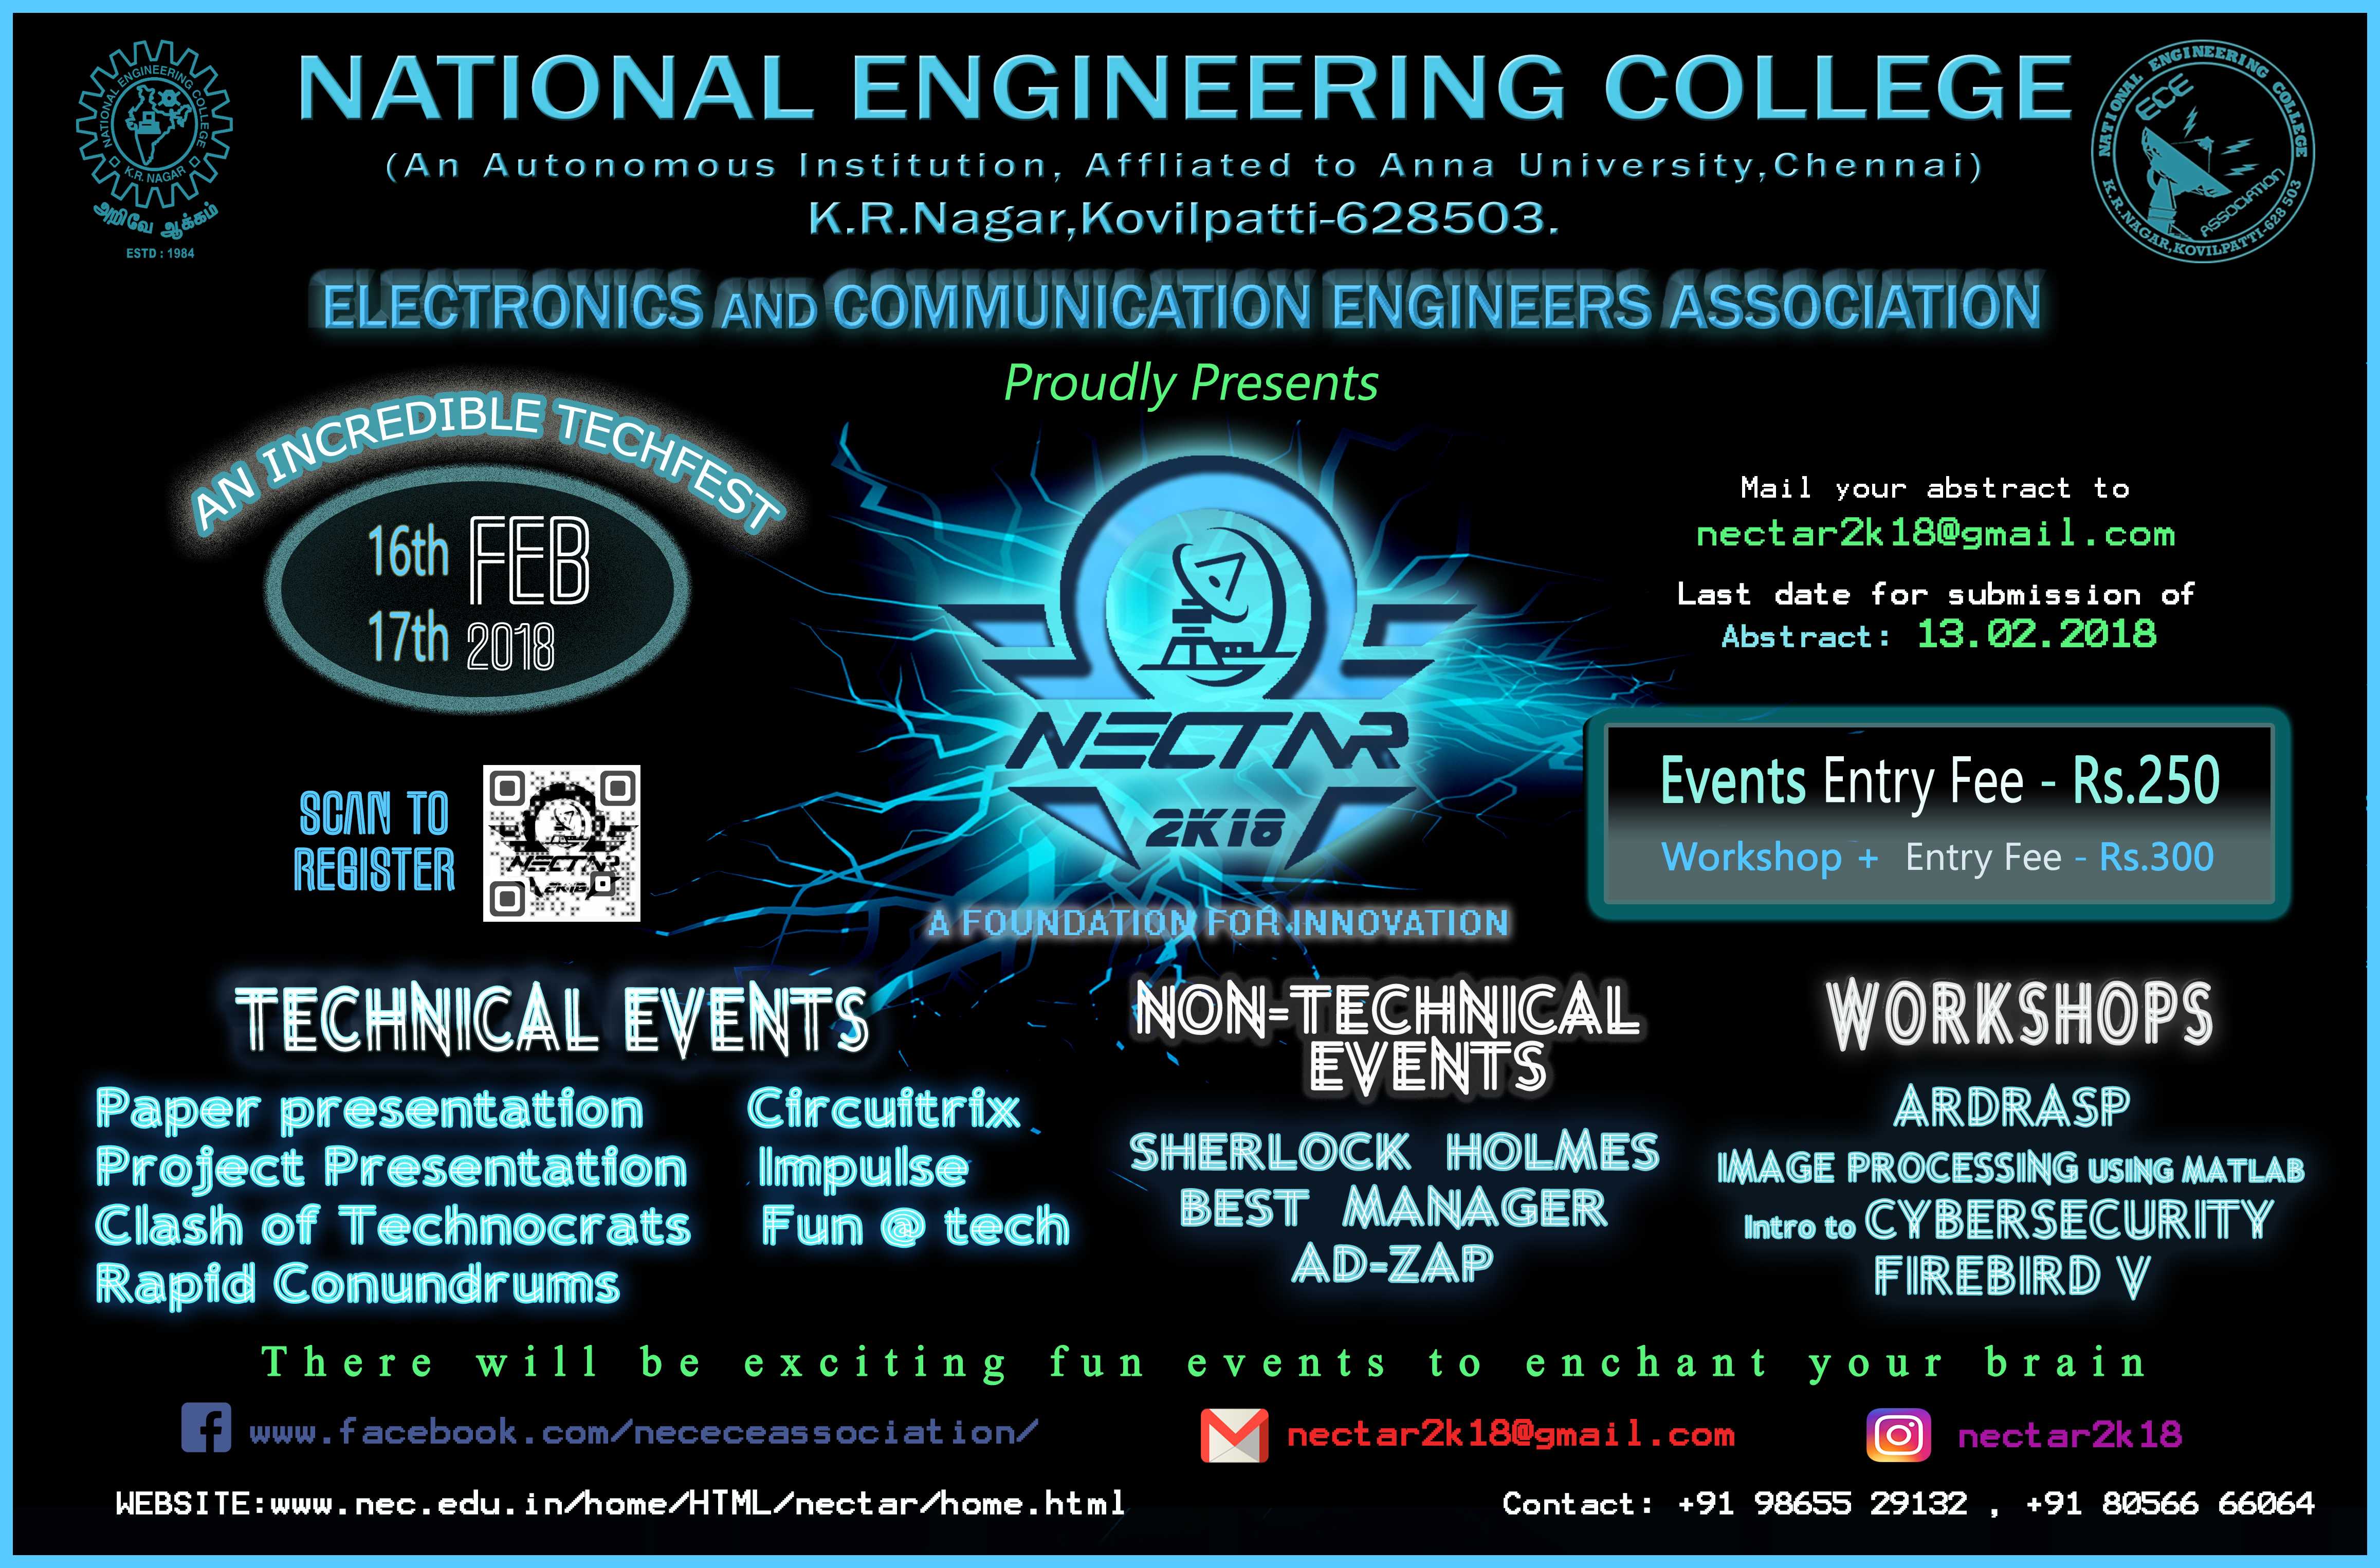 National Engineering College Tech Association's Renaissance NECTAR 2K18